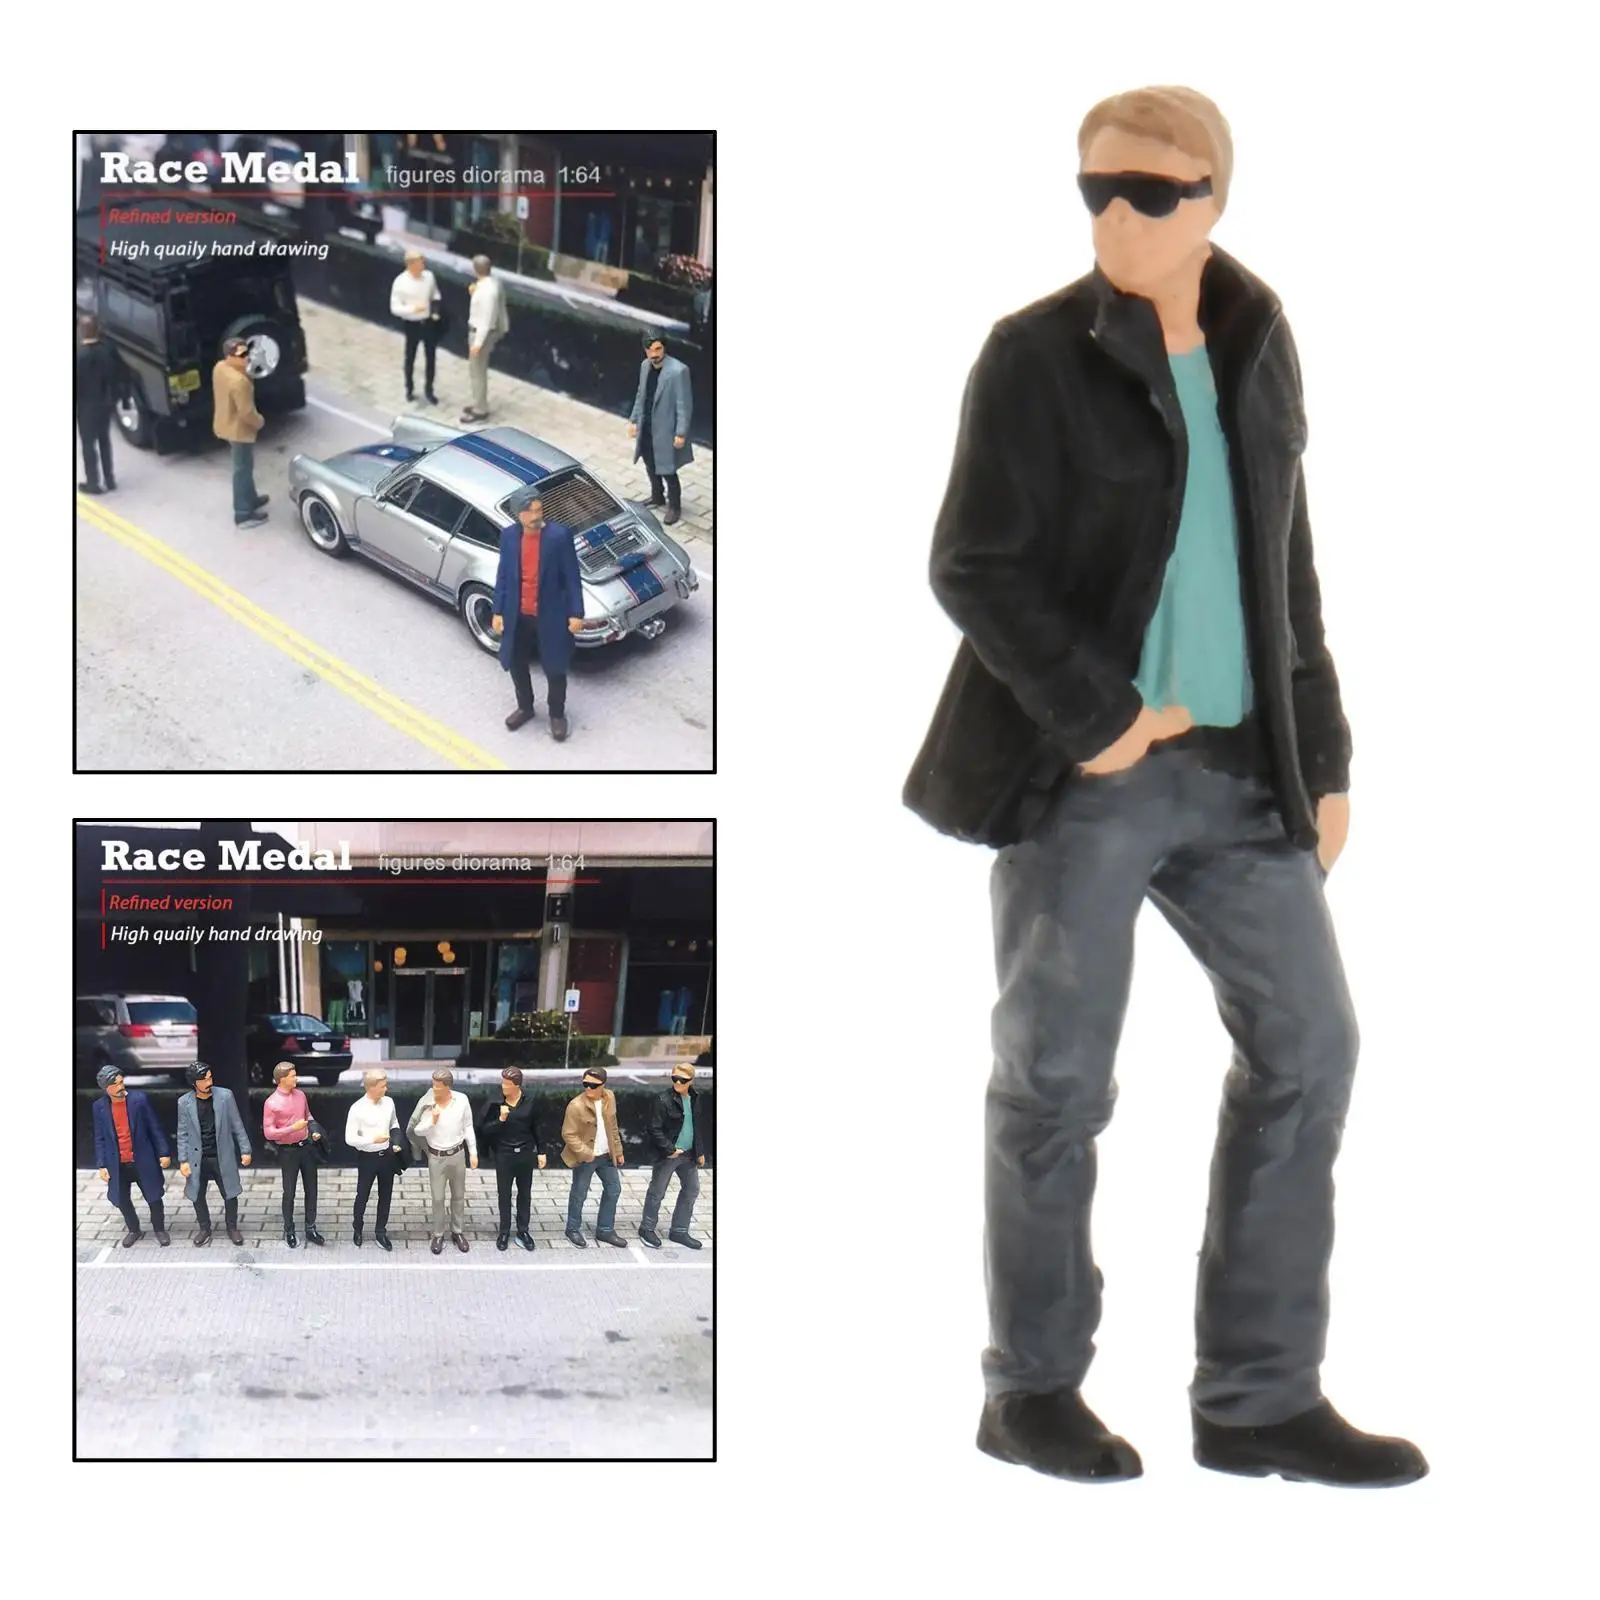 Mini 1:64 Scale Diorama Figure Jacket Street Train Scenery Accs Supplies, Look Real and Durable, Make the Scene  